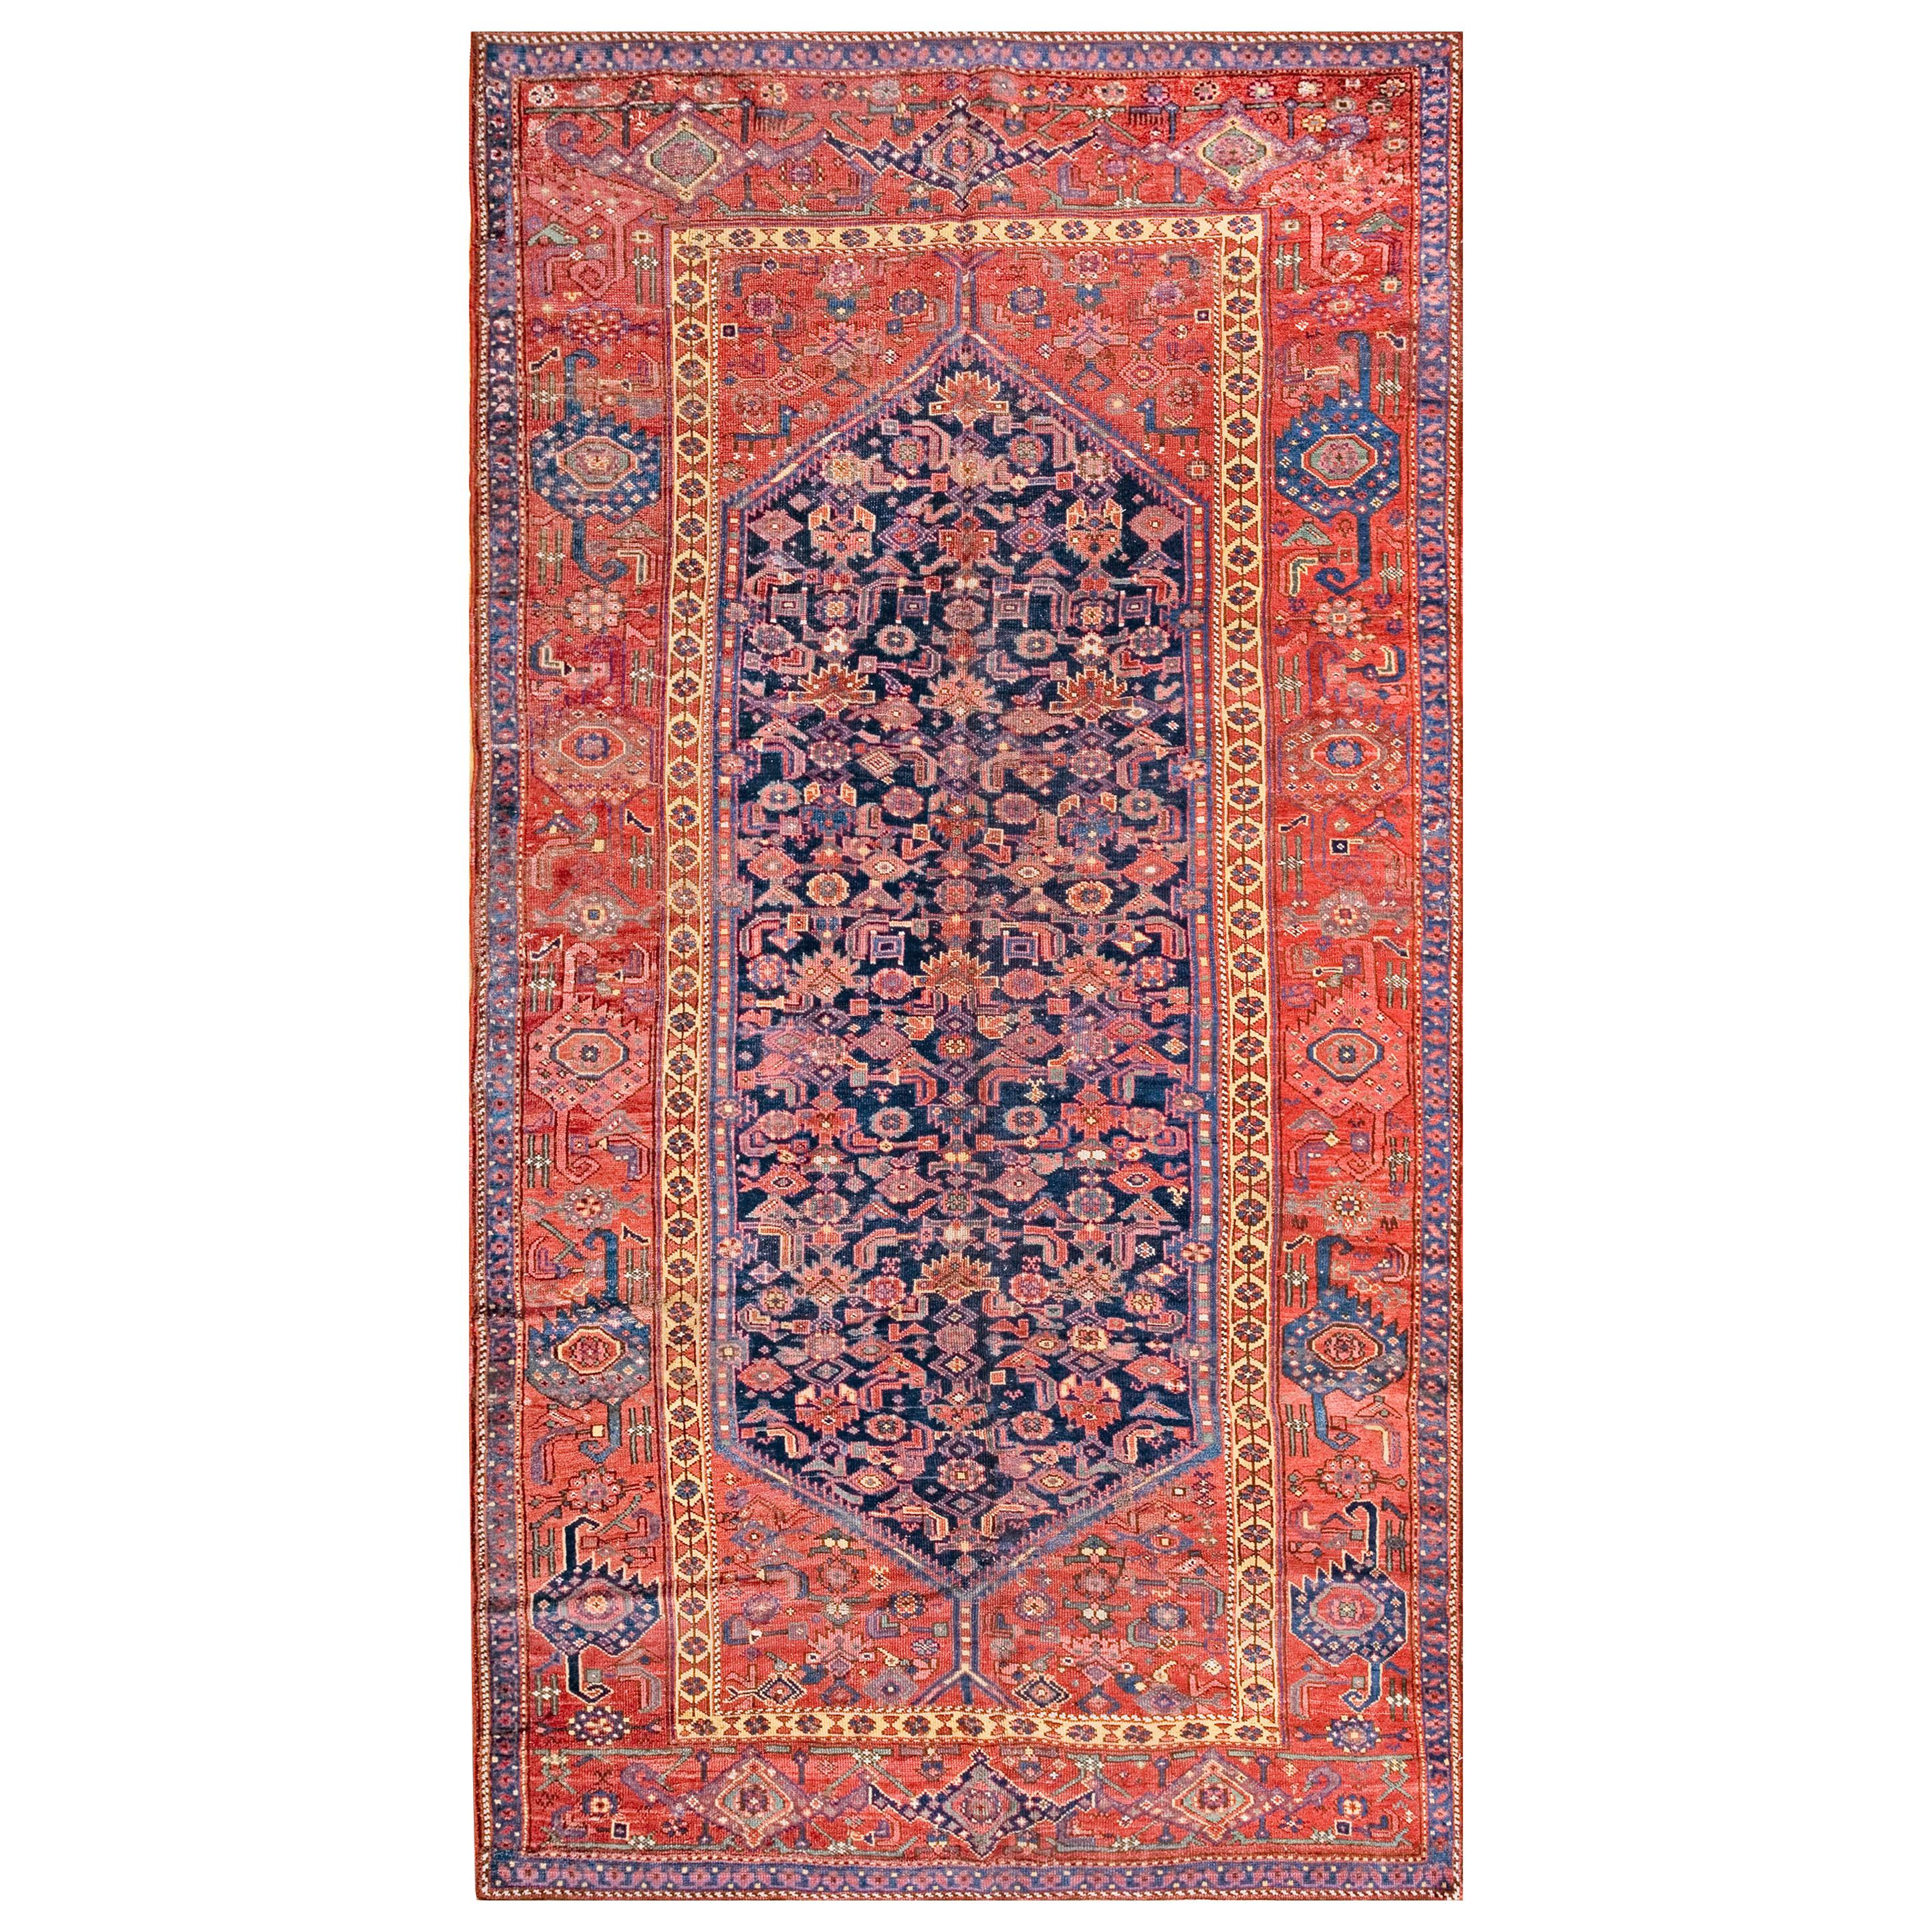 19th Century W. Persian Kurdish Carpet ( 5'9" x 10'6" - 175 x 320 ) For Sale